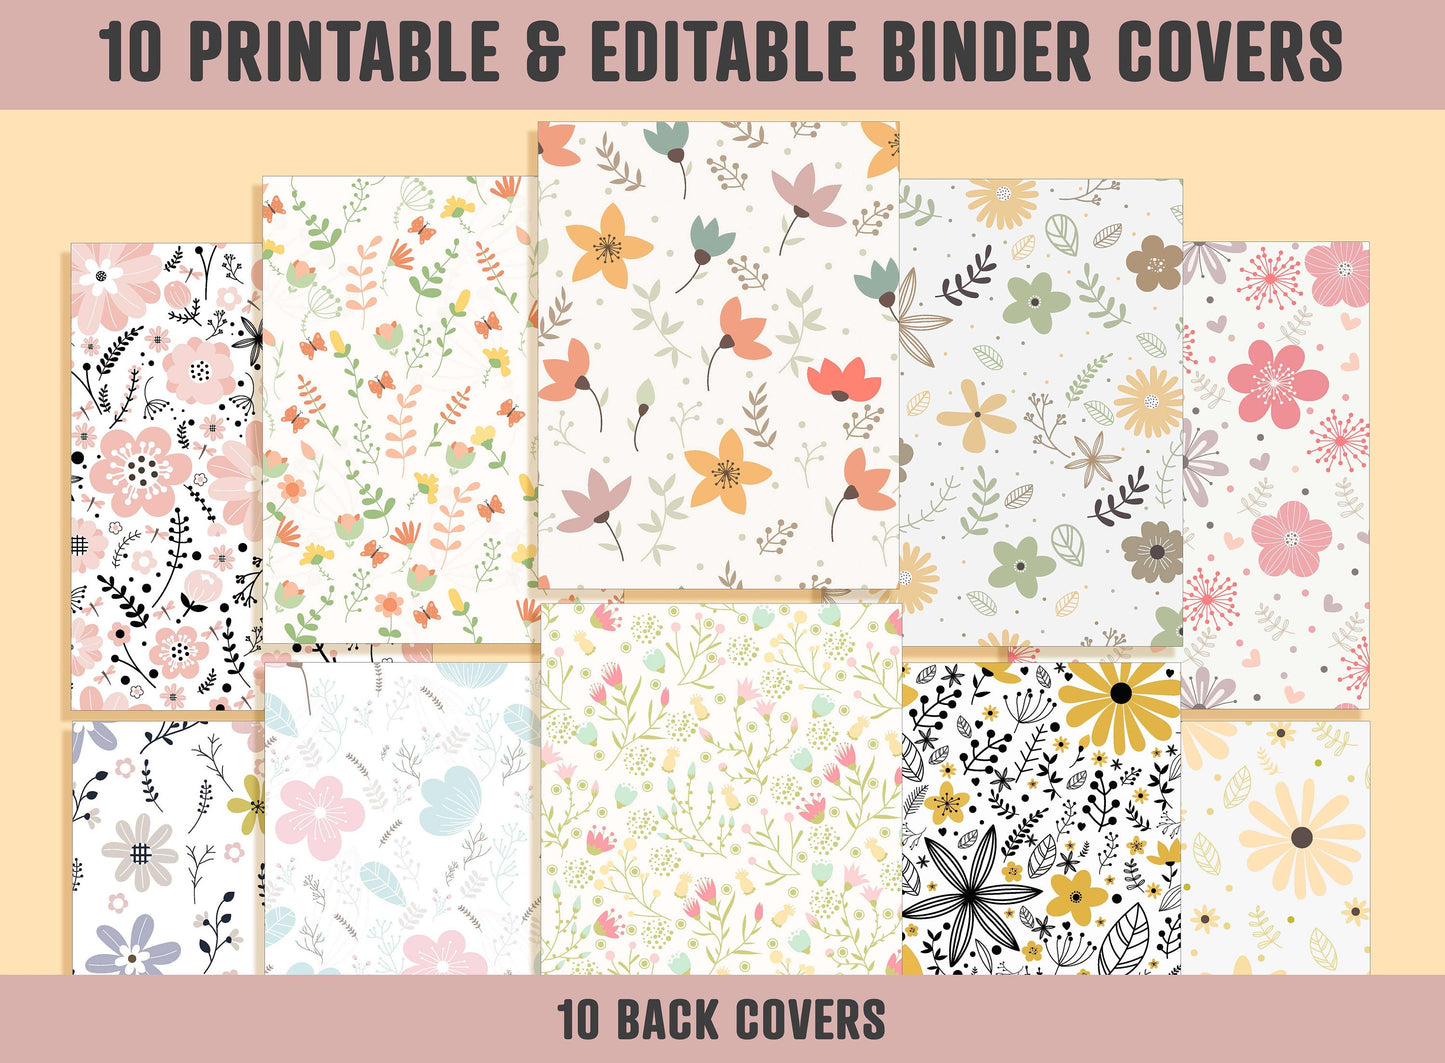 Binder Cover Sheet, 10 Printable & Editable Binder Covers+Spines, Floral Binder Cover, Binder Cover Inserts Planner Template Teacher/School